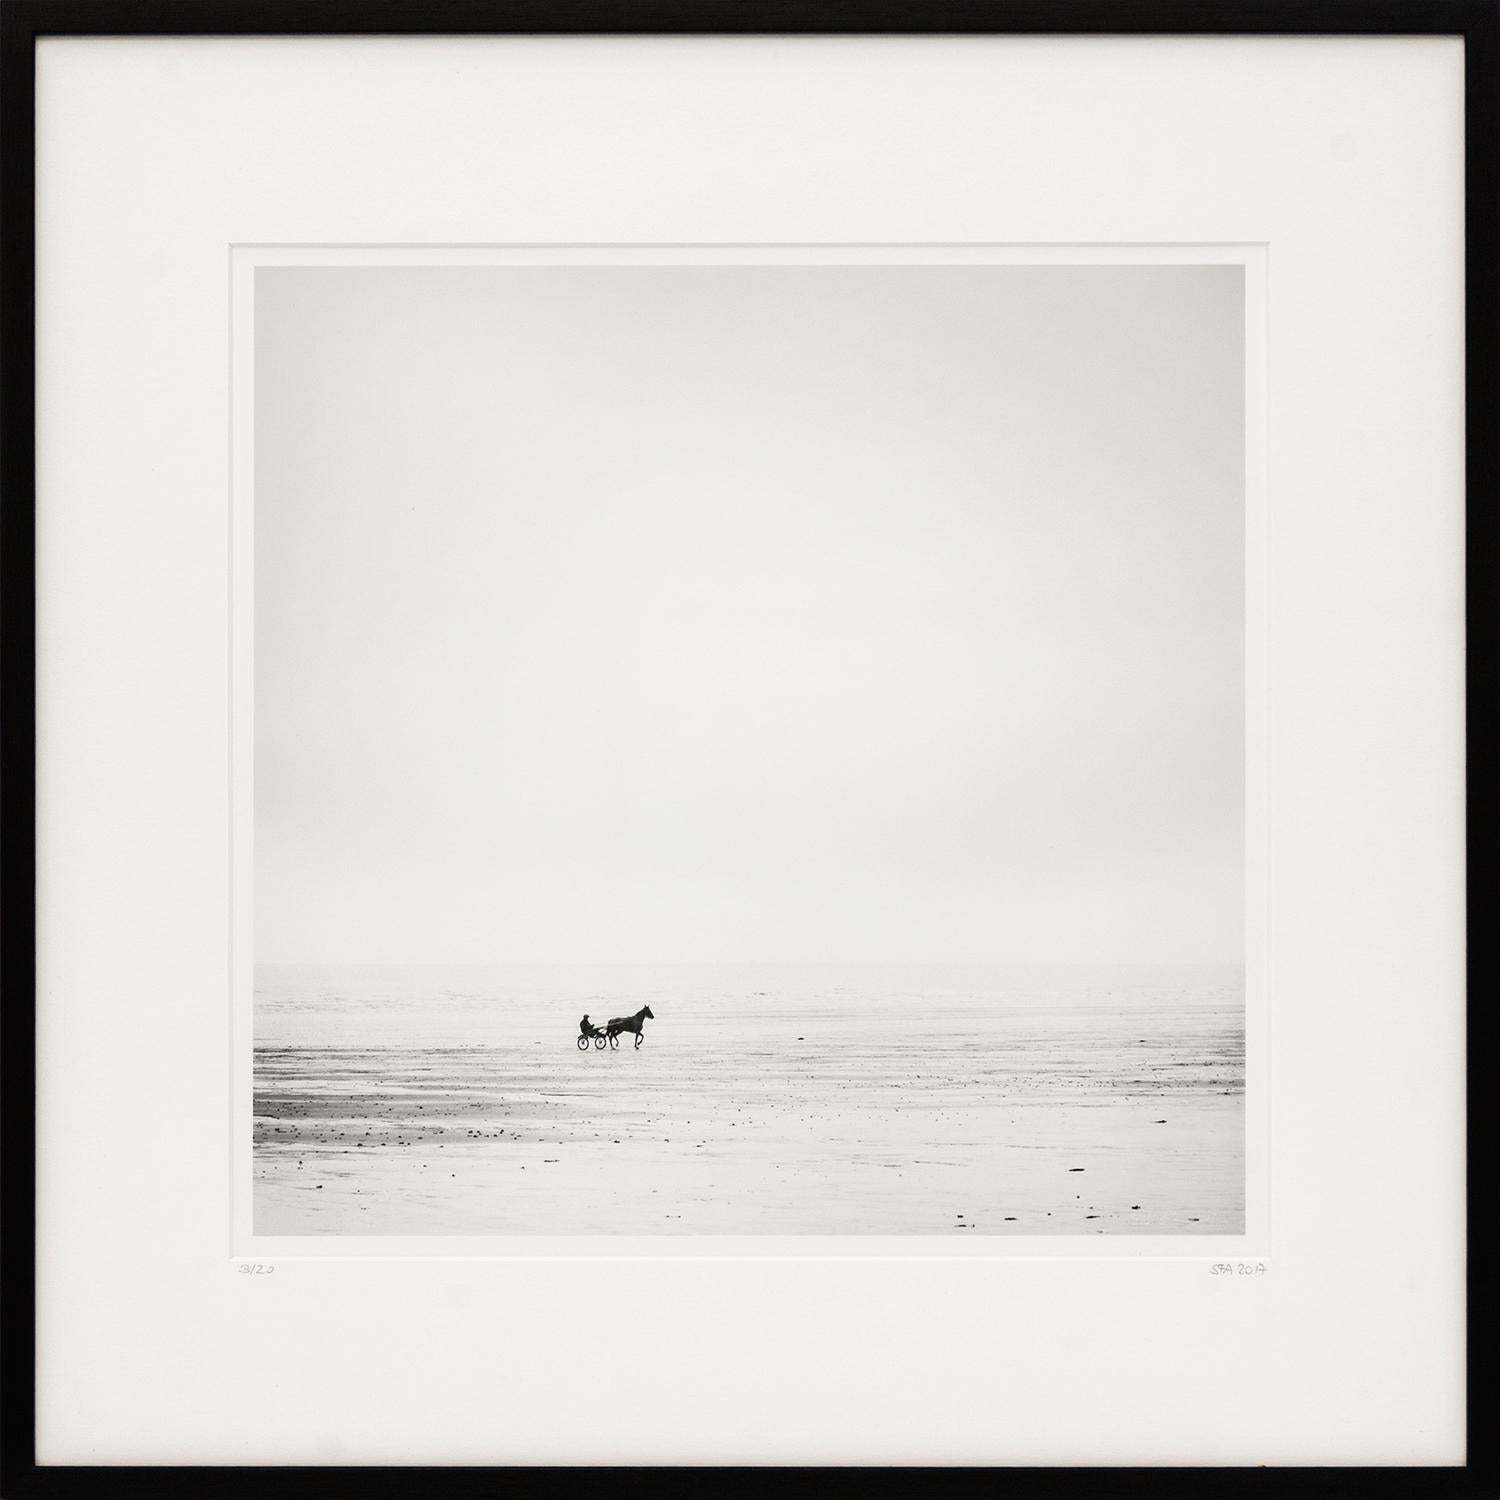 Whiting, France, Wood, plage, paysage en noir et blanc, cadre en bois.